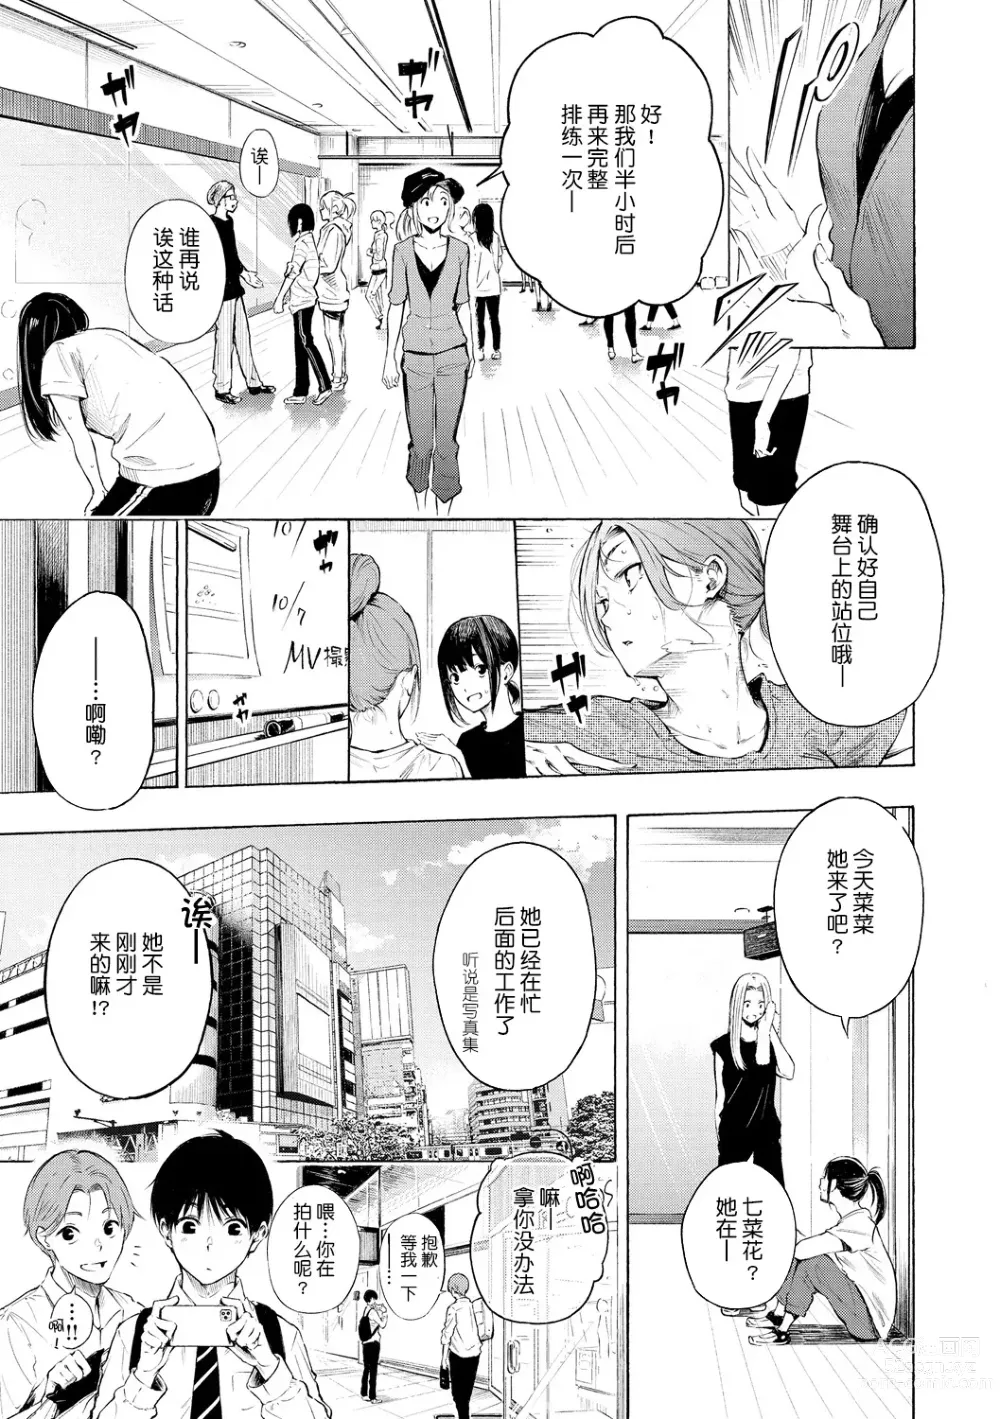 Page 6 of manga Frustration Girls